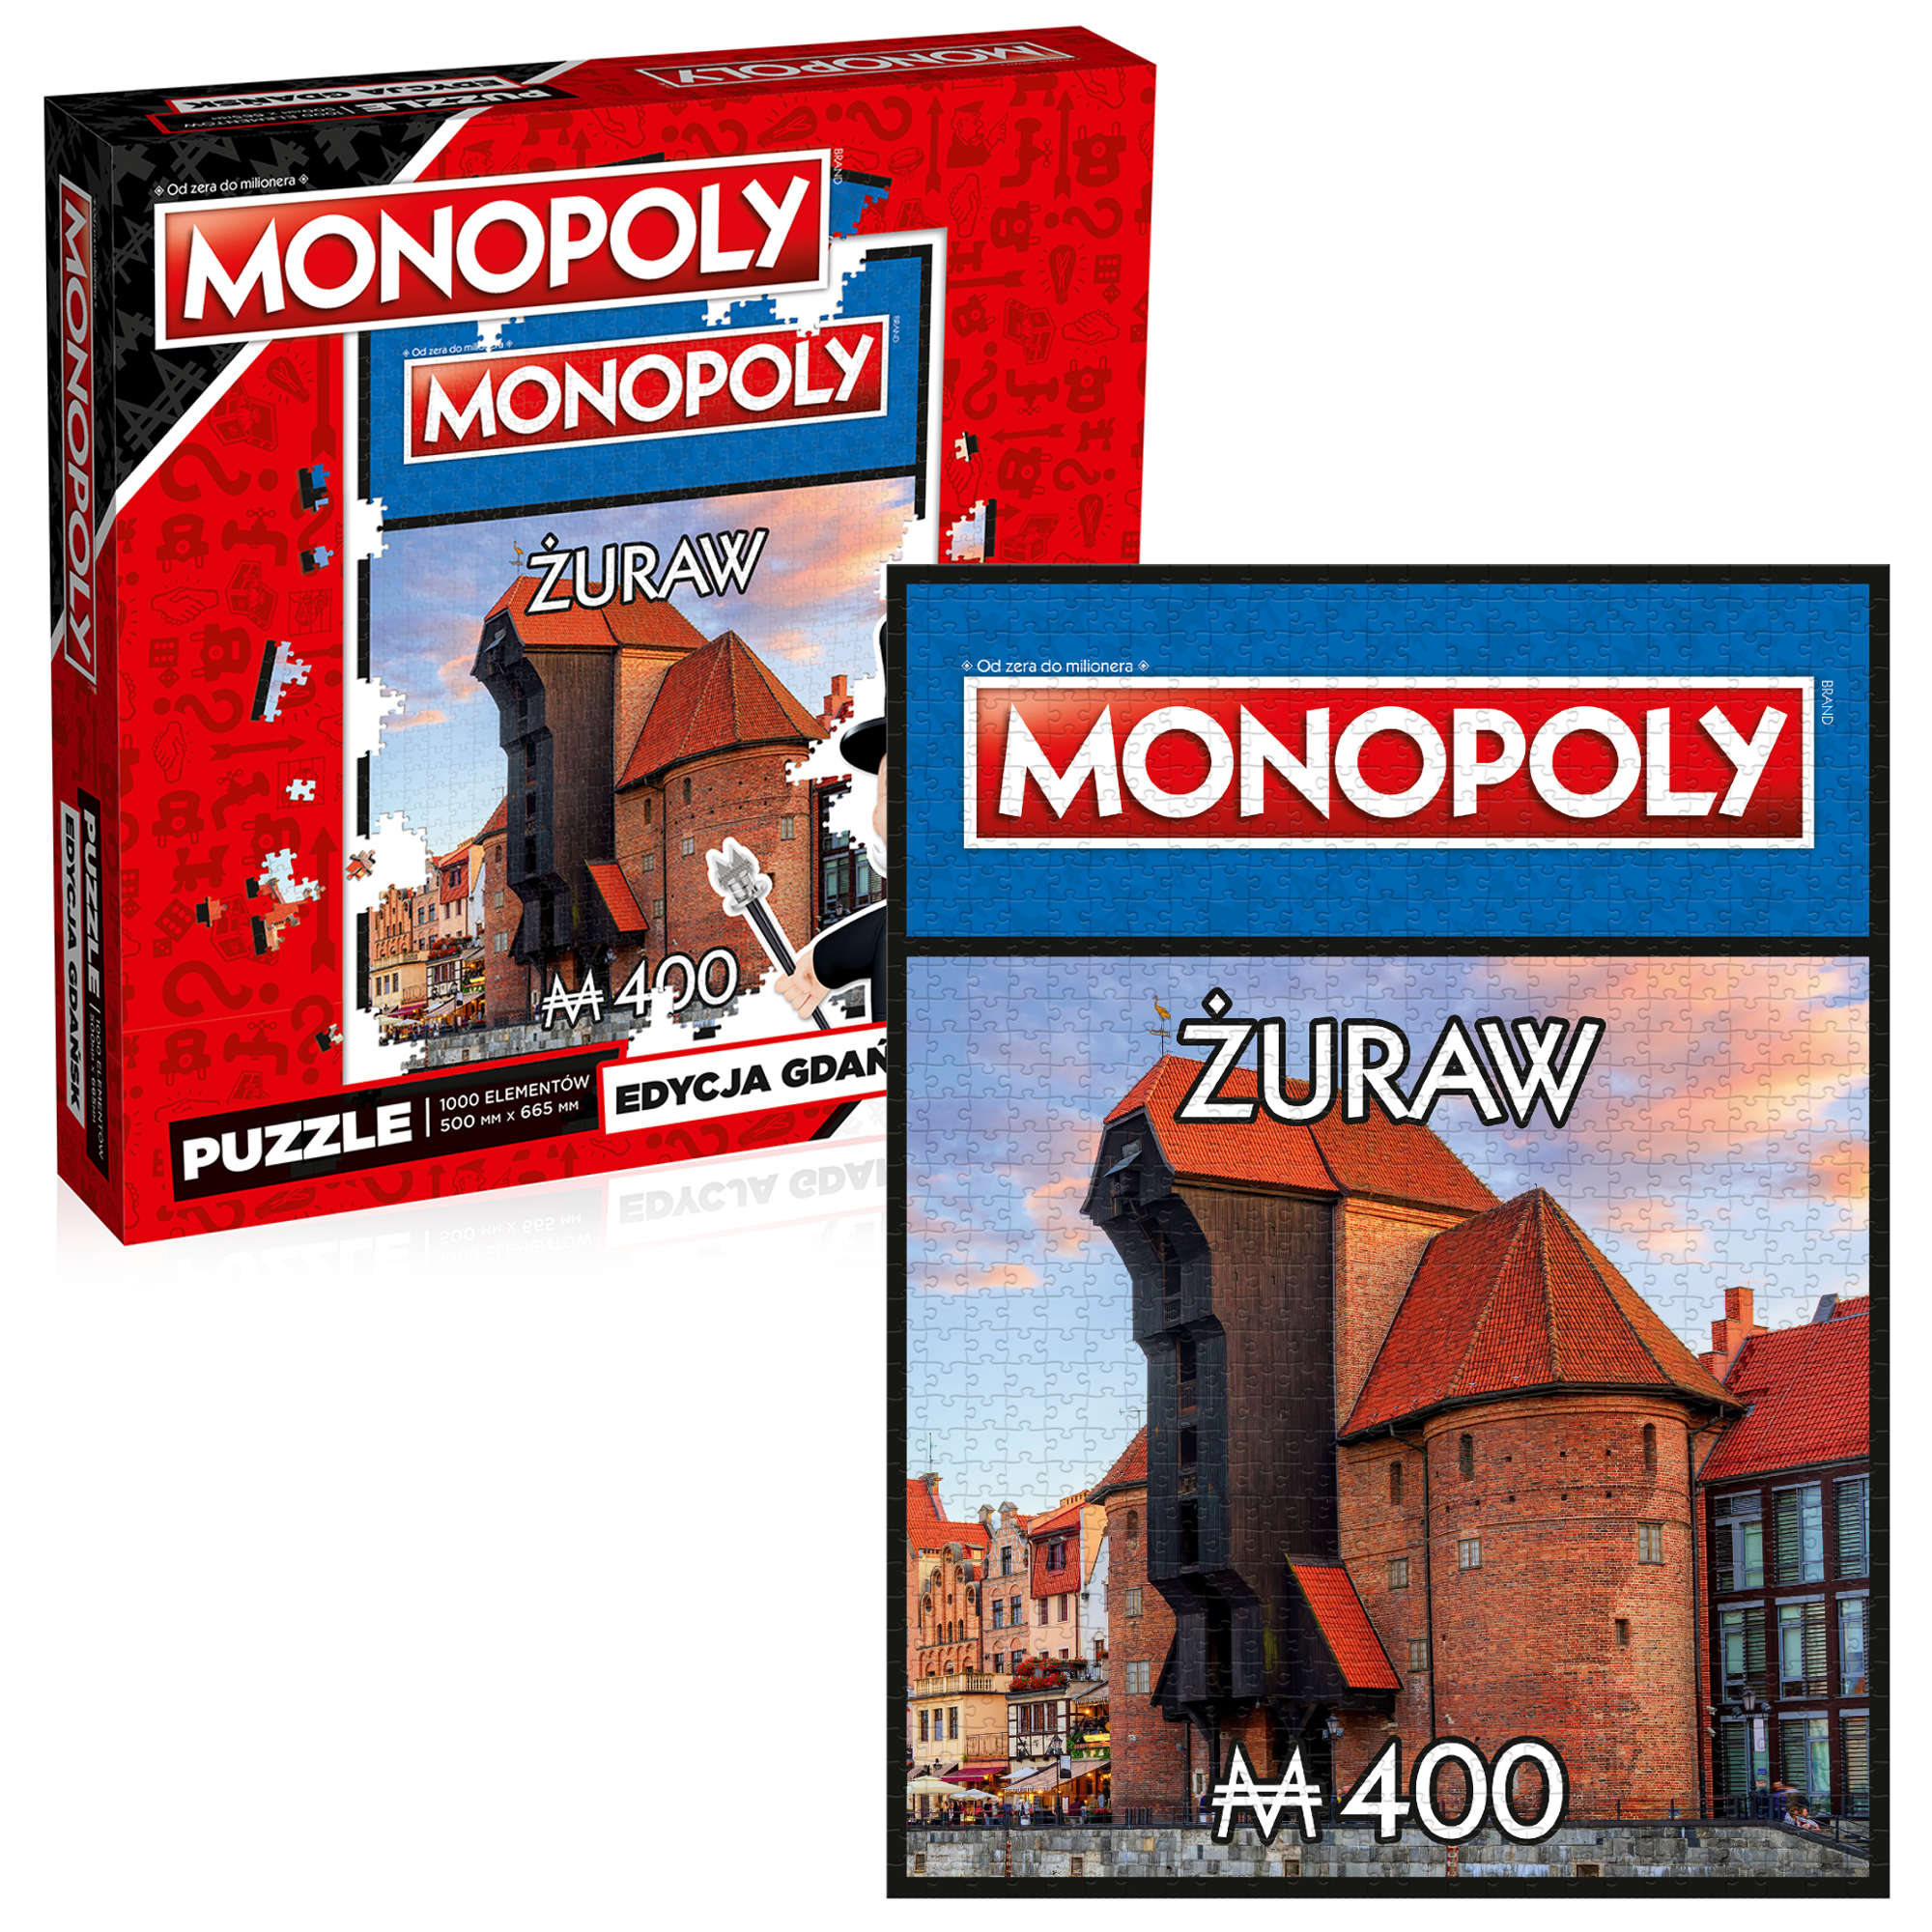 Puzzle Monopoly Gdask uraw Gdaski 1000 elementw Winning Moves